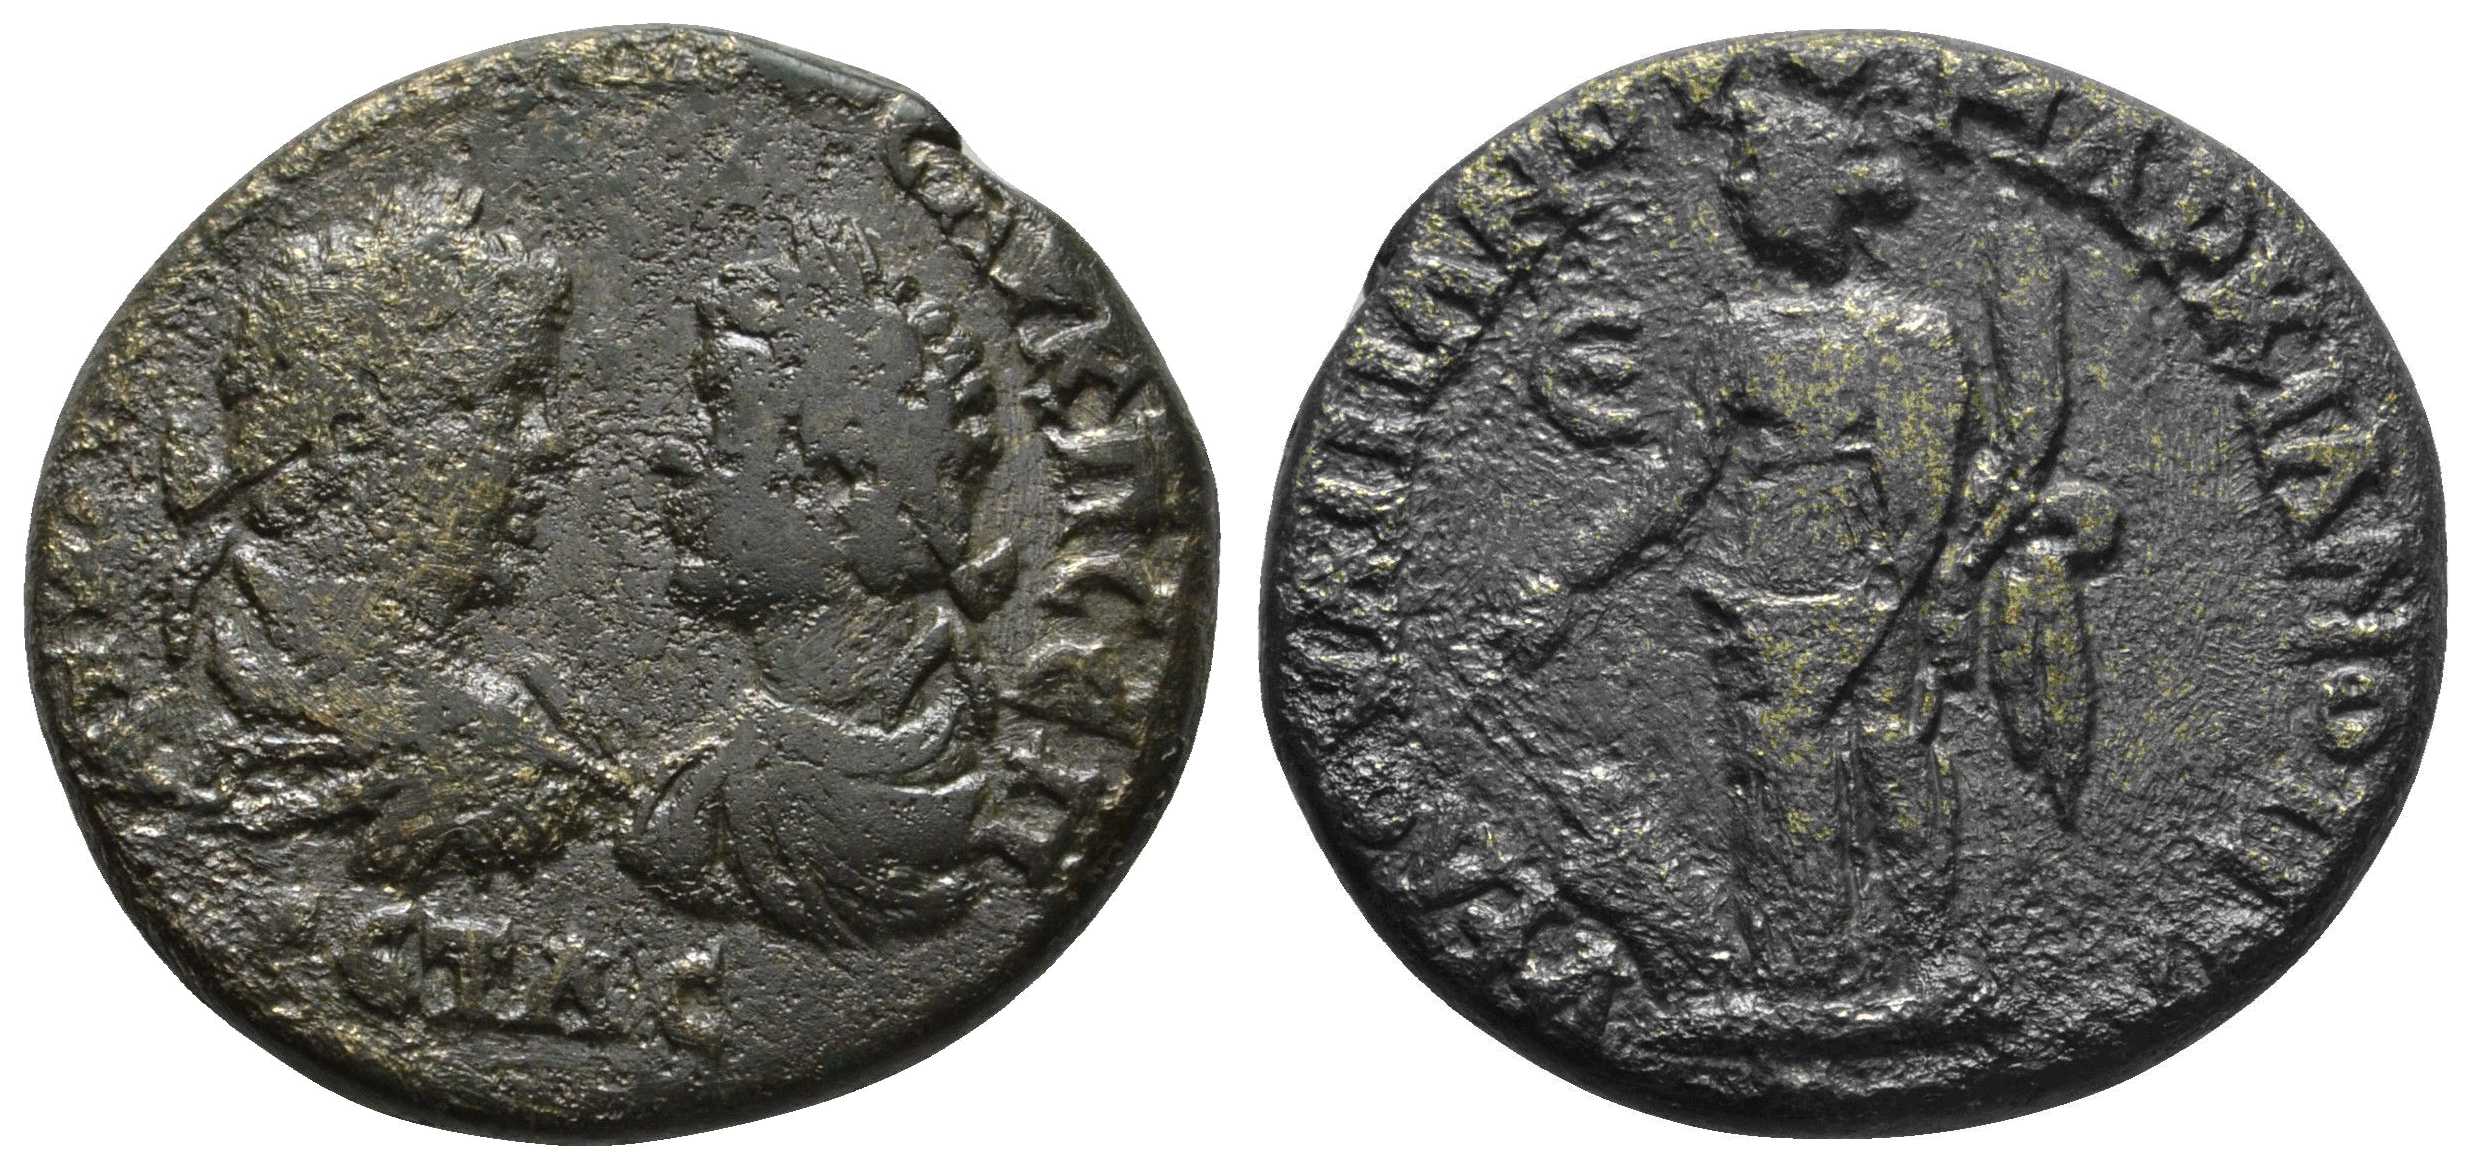 5927 Marcianopolis Moesia Inferior Caracalla & Geta AE